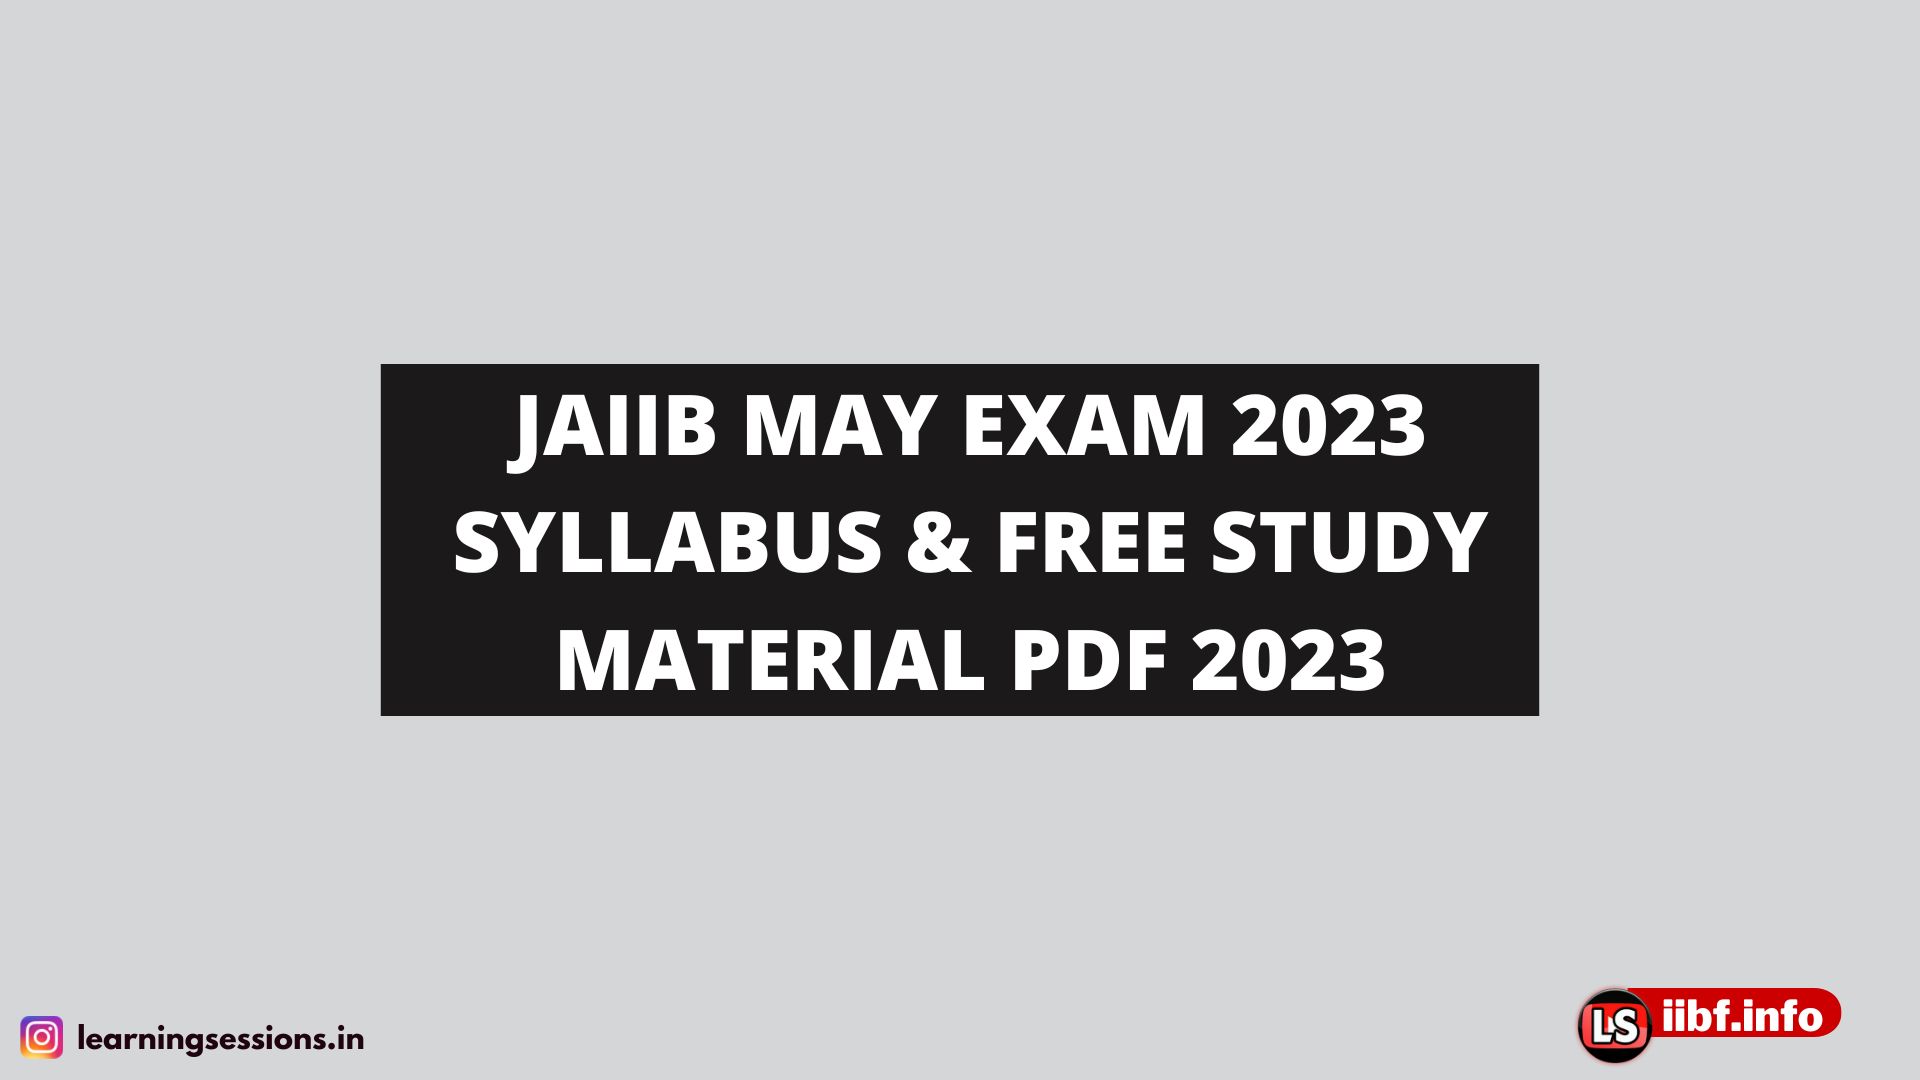 JAIIB MAY EXAM 2023 SYLLABUS & FREE STUDY MATERIAL PDF 2023